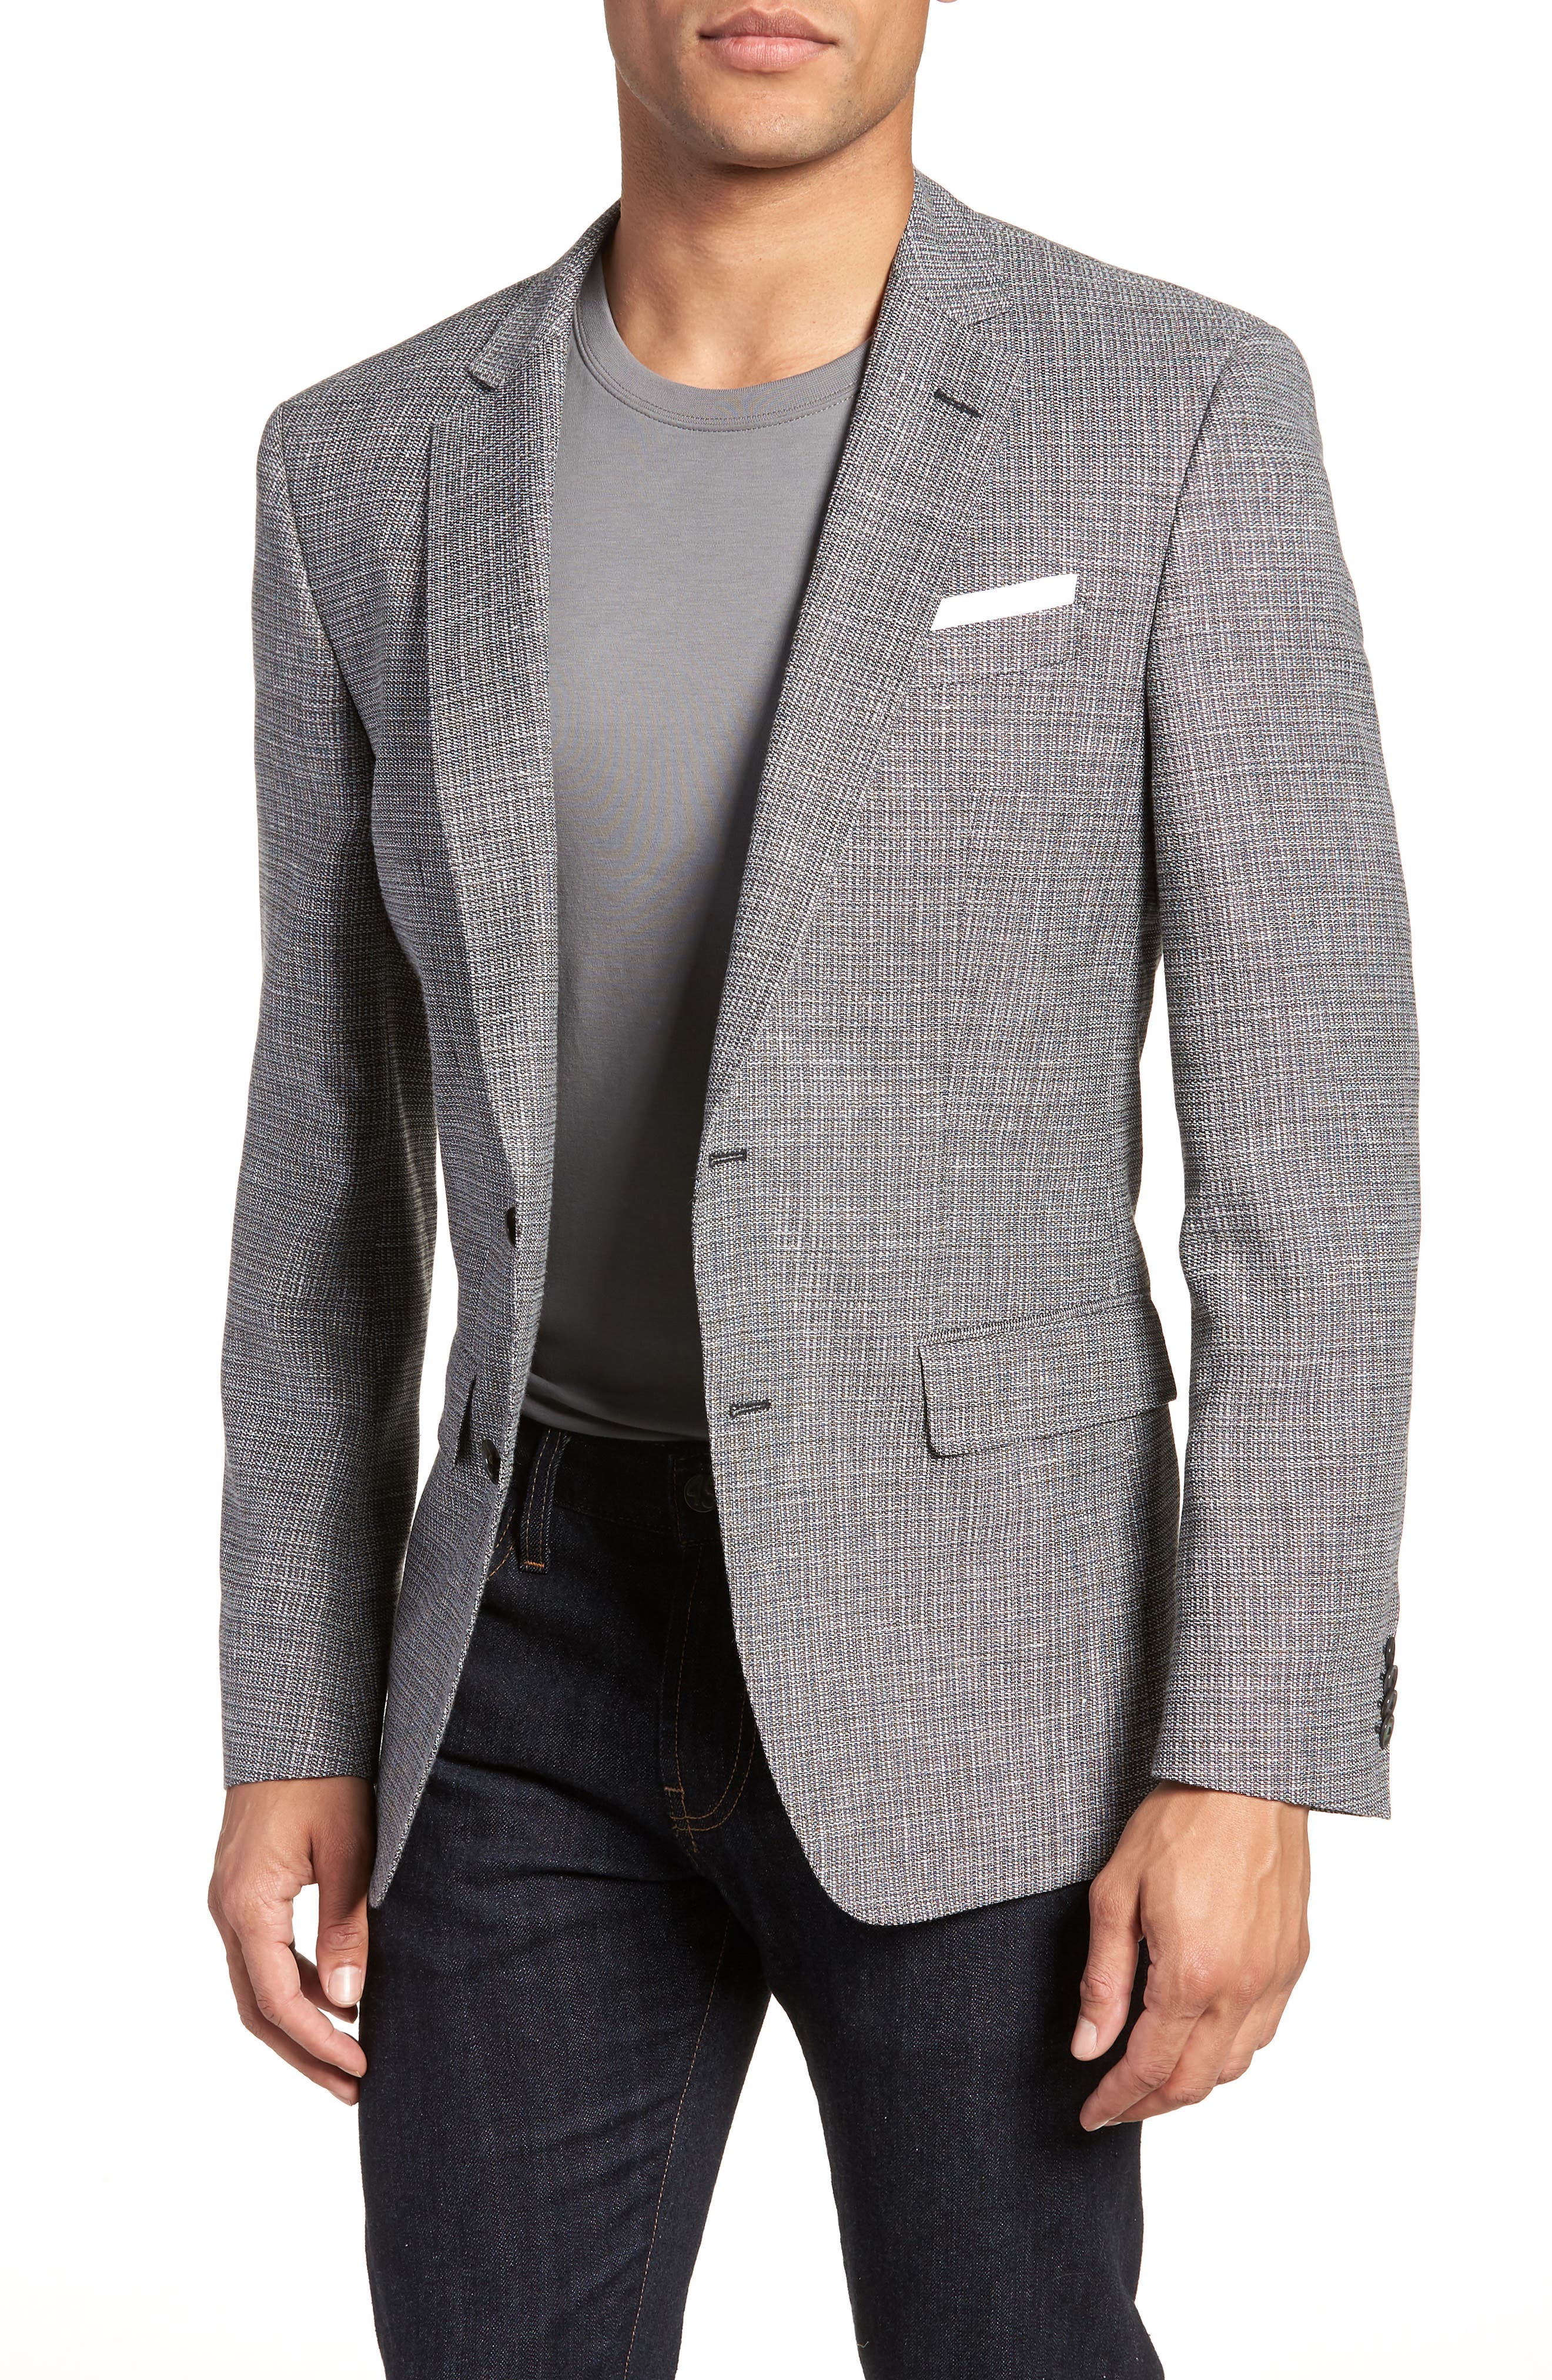 Best sports coat for men rochester xxl online, Off white t shirt dhgate, american apparel t shirt design. 